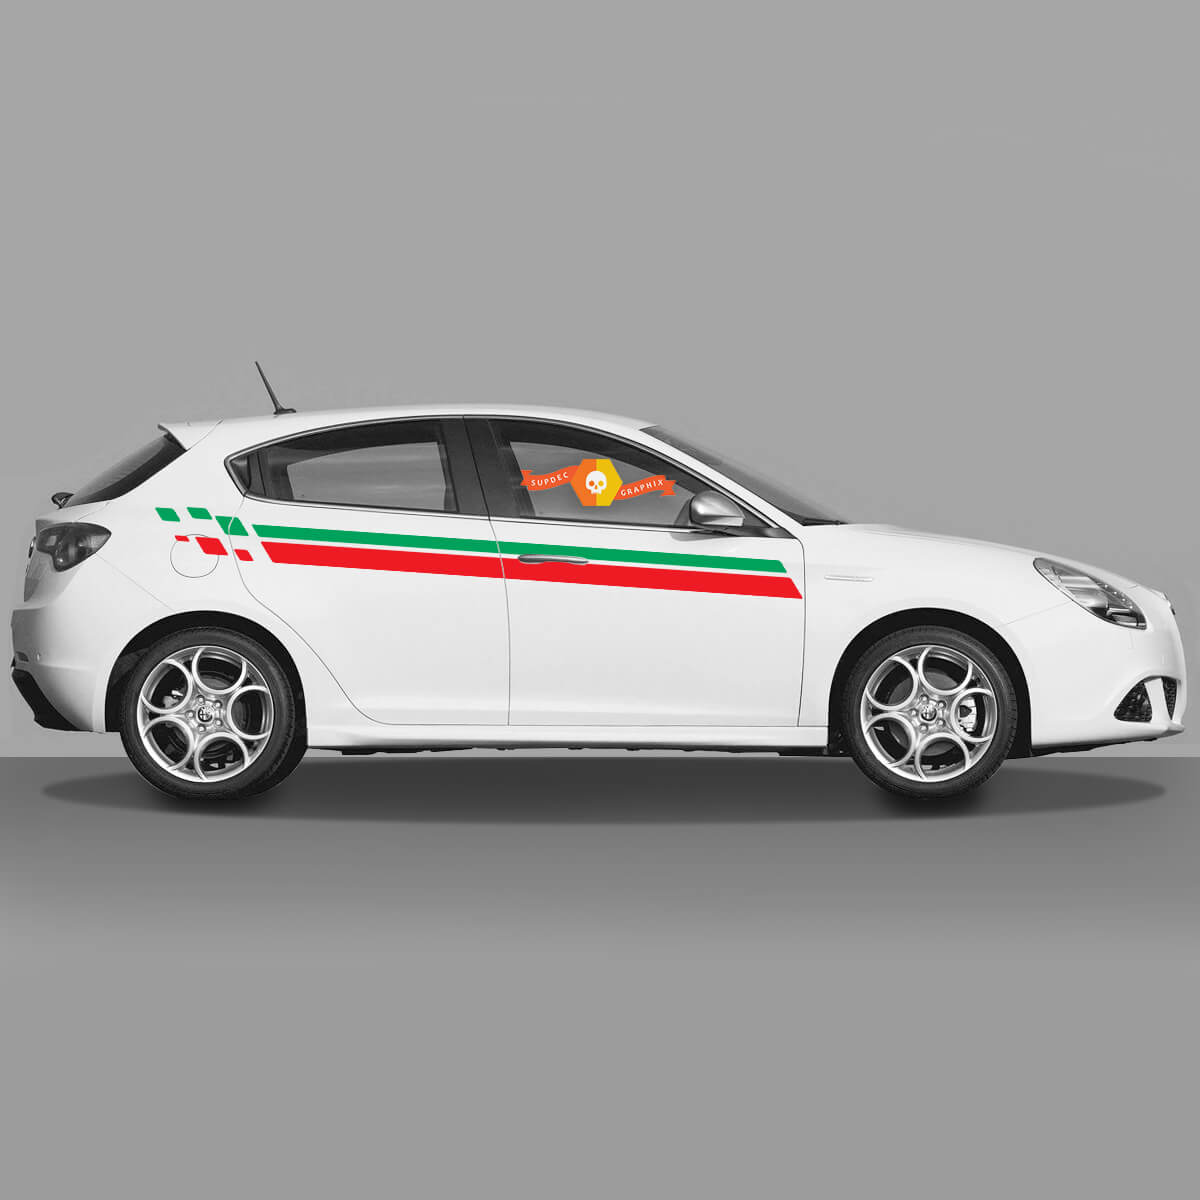 2x Doors Body Decal fits Alfa Romeo Giulietta decals Vinyl Graphics Italy Flag snippet 2021